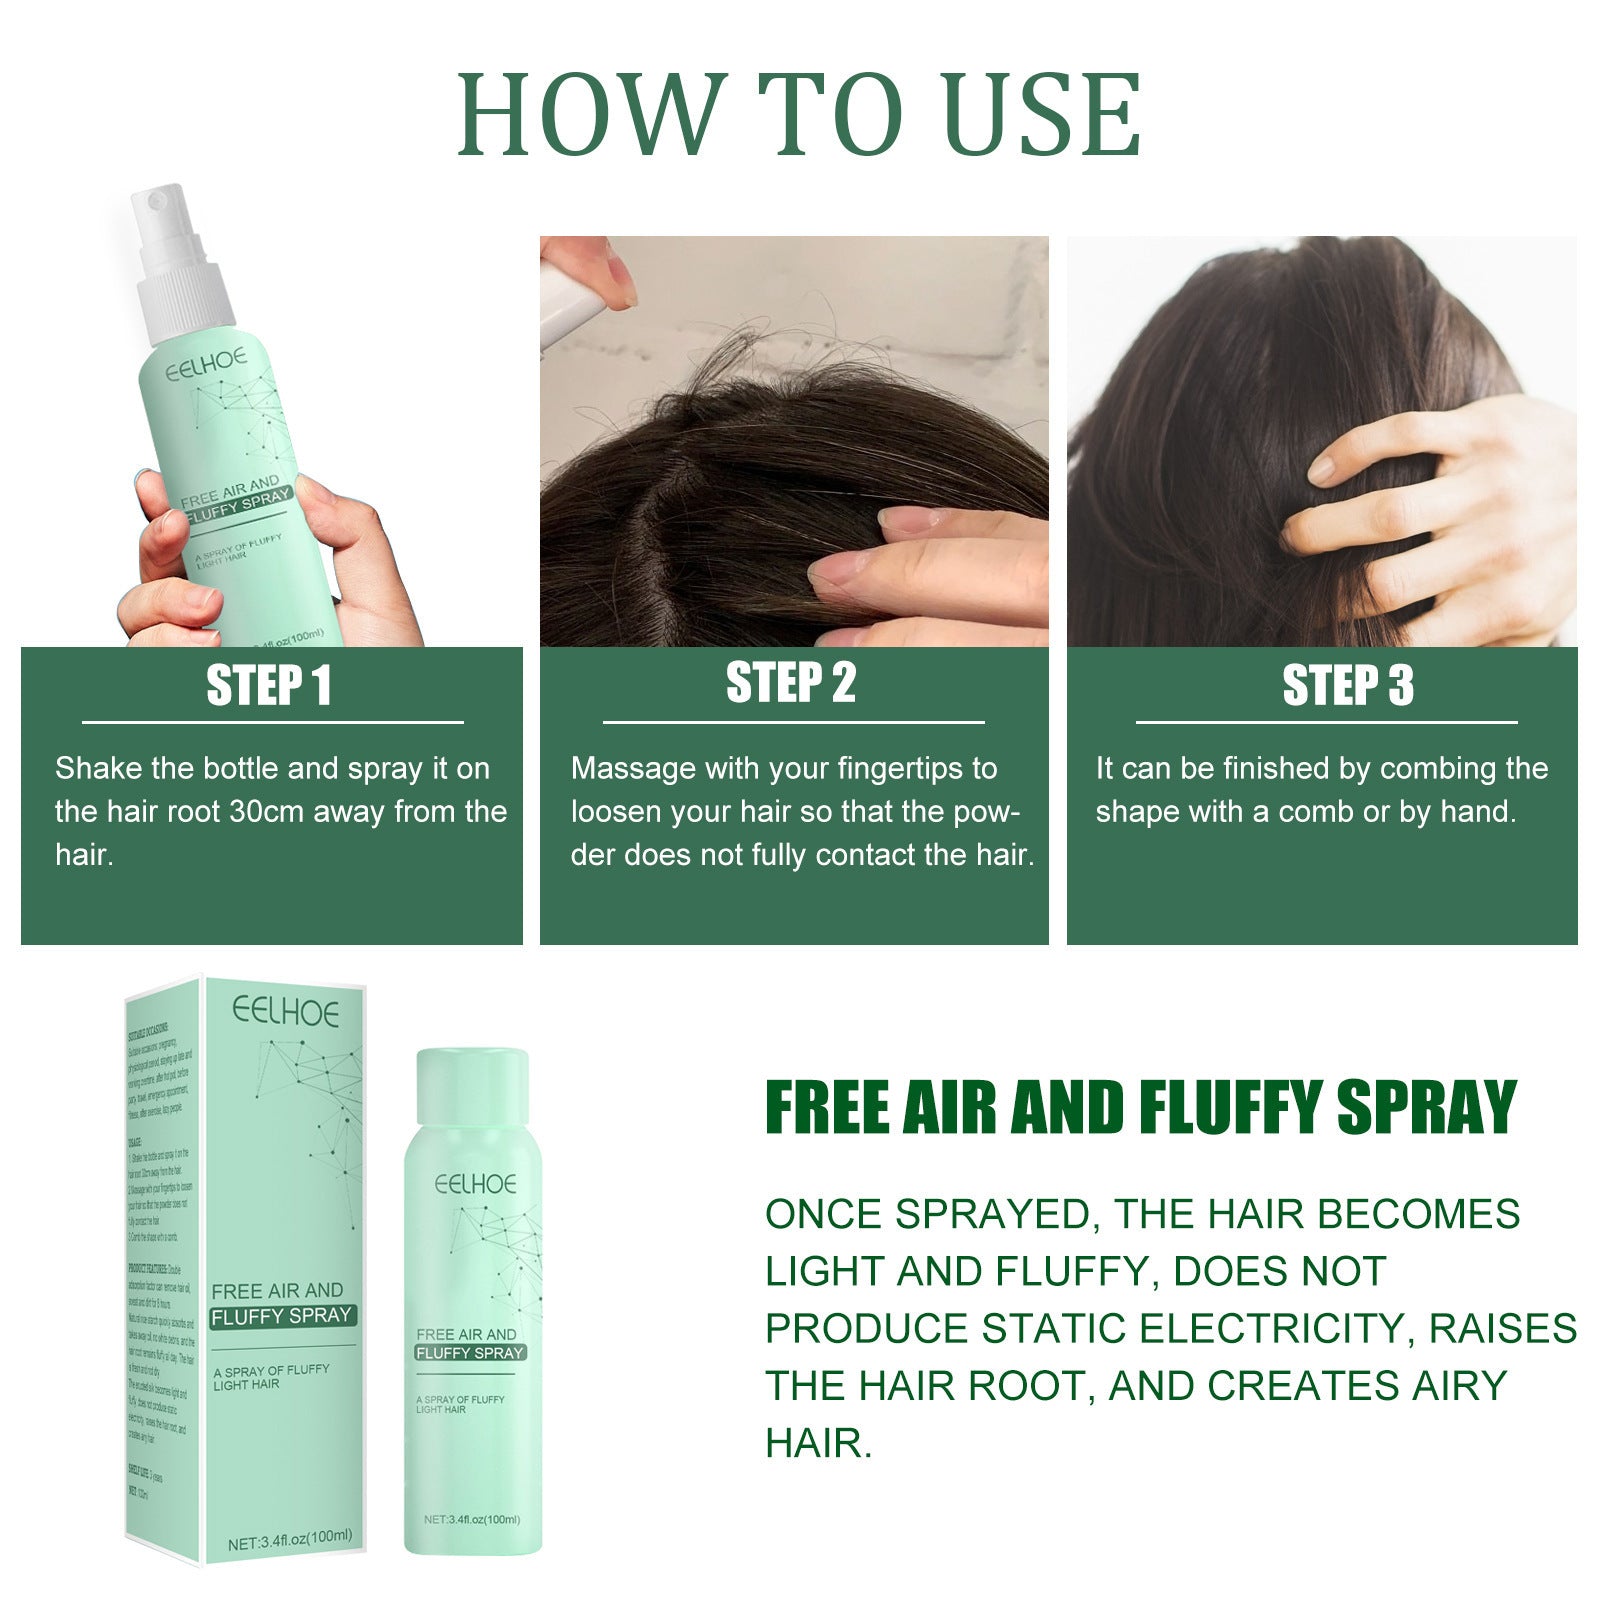 EELHOE Air Fluffy Degreasing Hair Spray